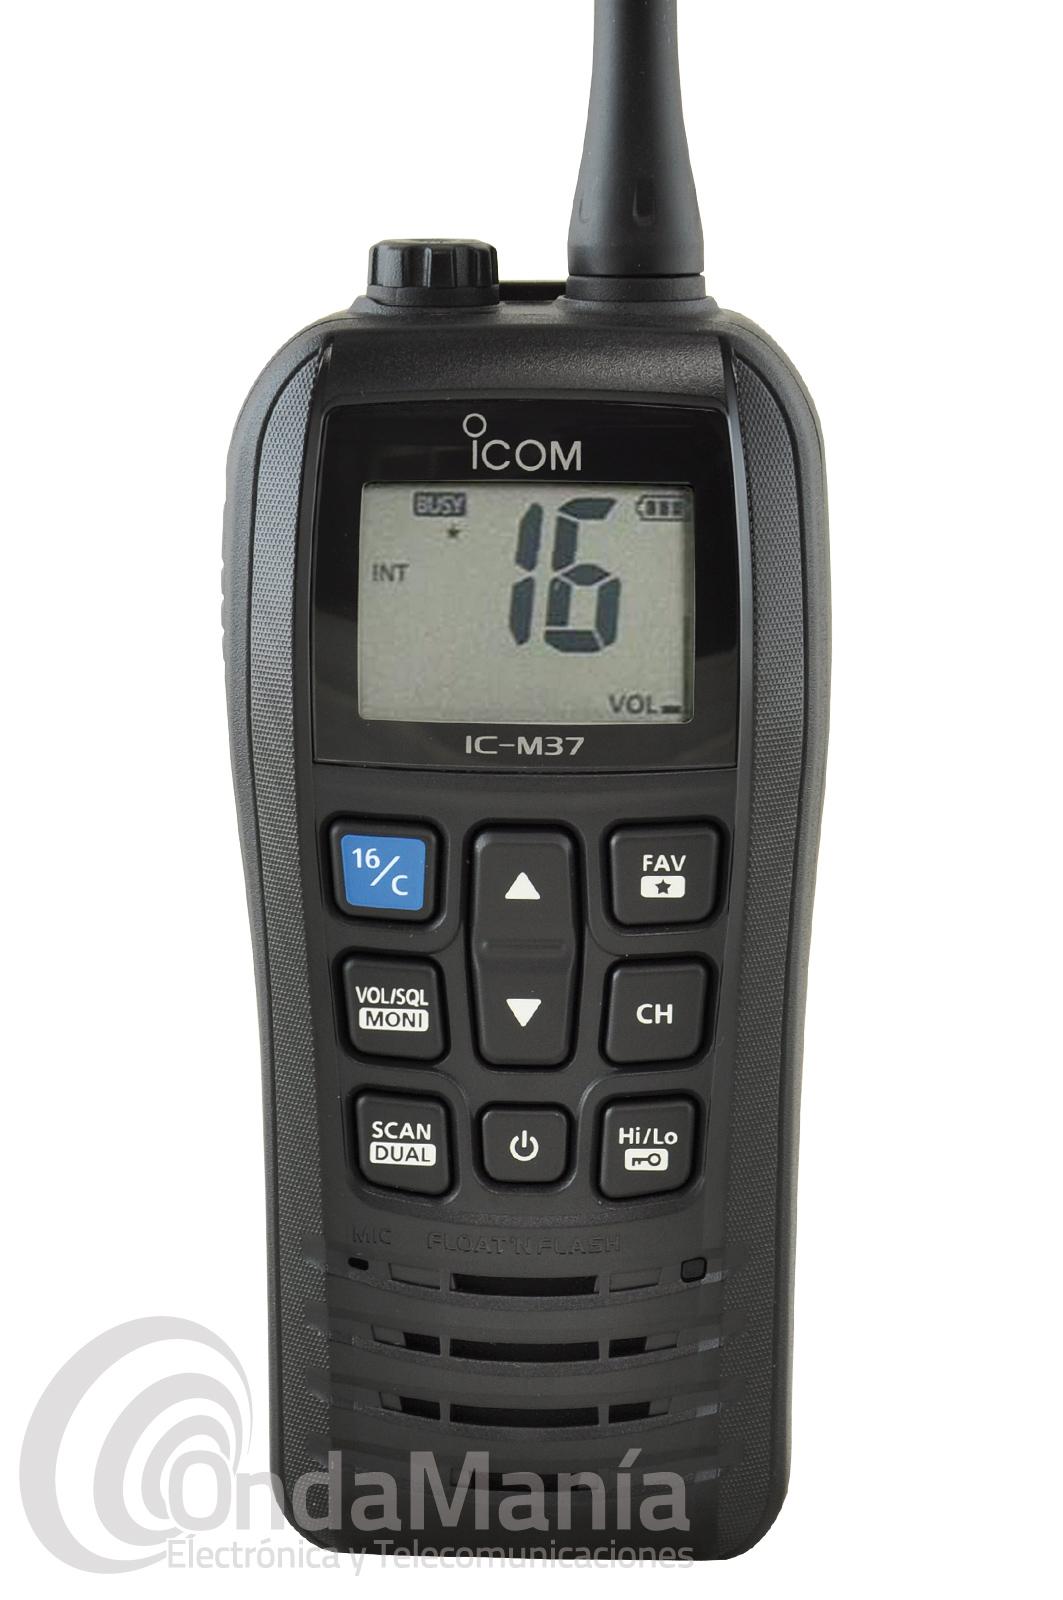 TALKIE MARINO DE VHF ICOM IC-M37 CON 6 WATIOS DE POTENCIA, 12 HORAS DE FLOTA, IP57 |ICOM| ONDAMANIA TU DSTRIBUIDOR AUTORIZADO DE WALKYS ICOM